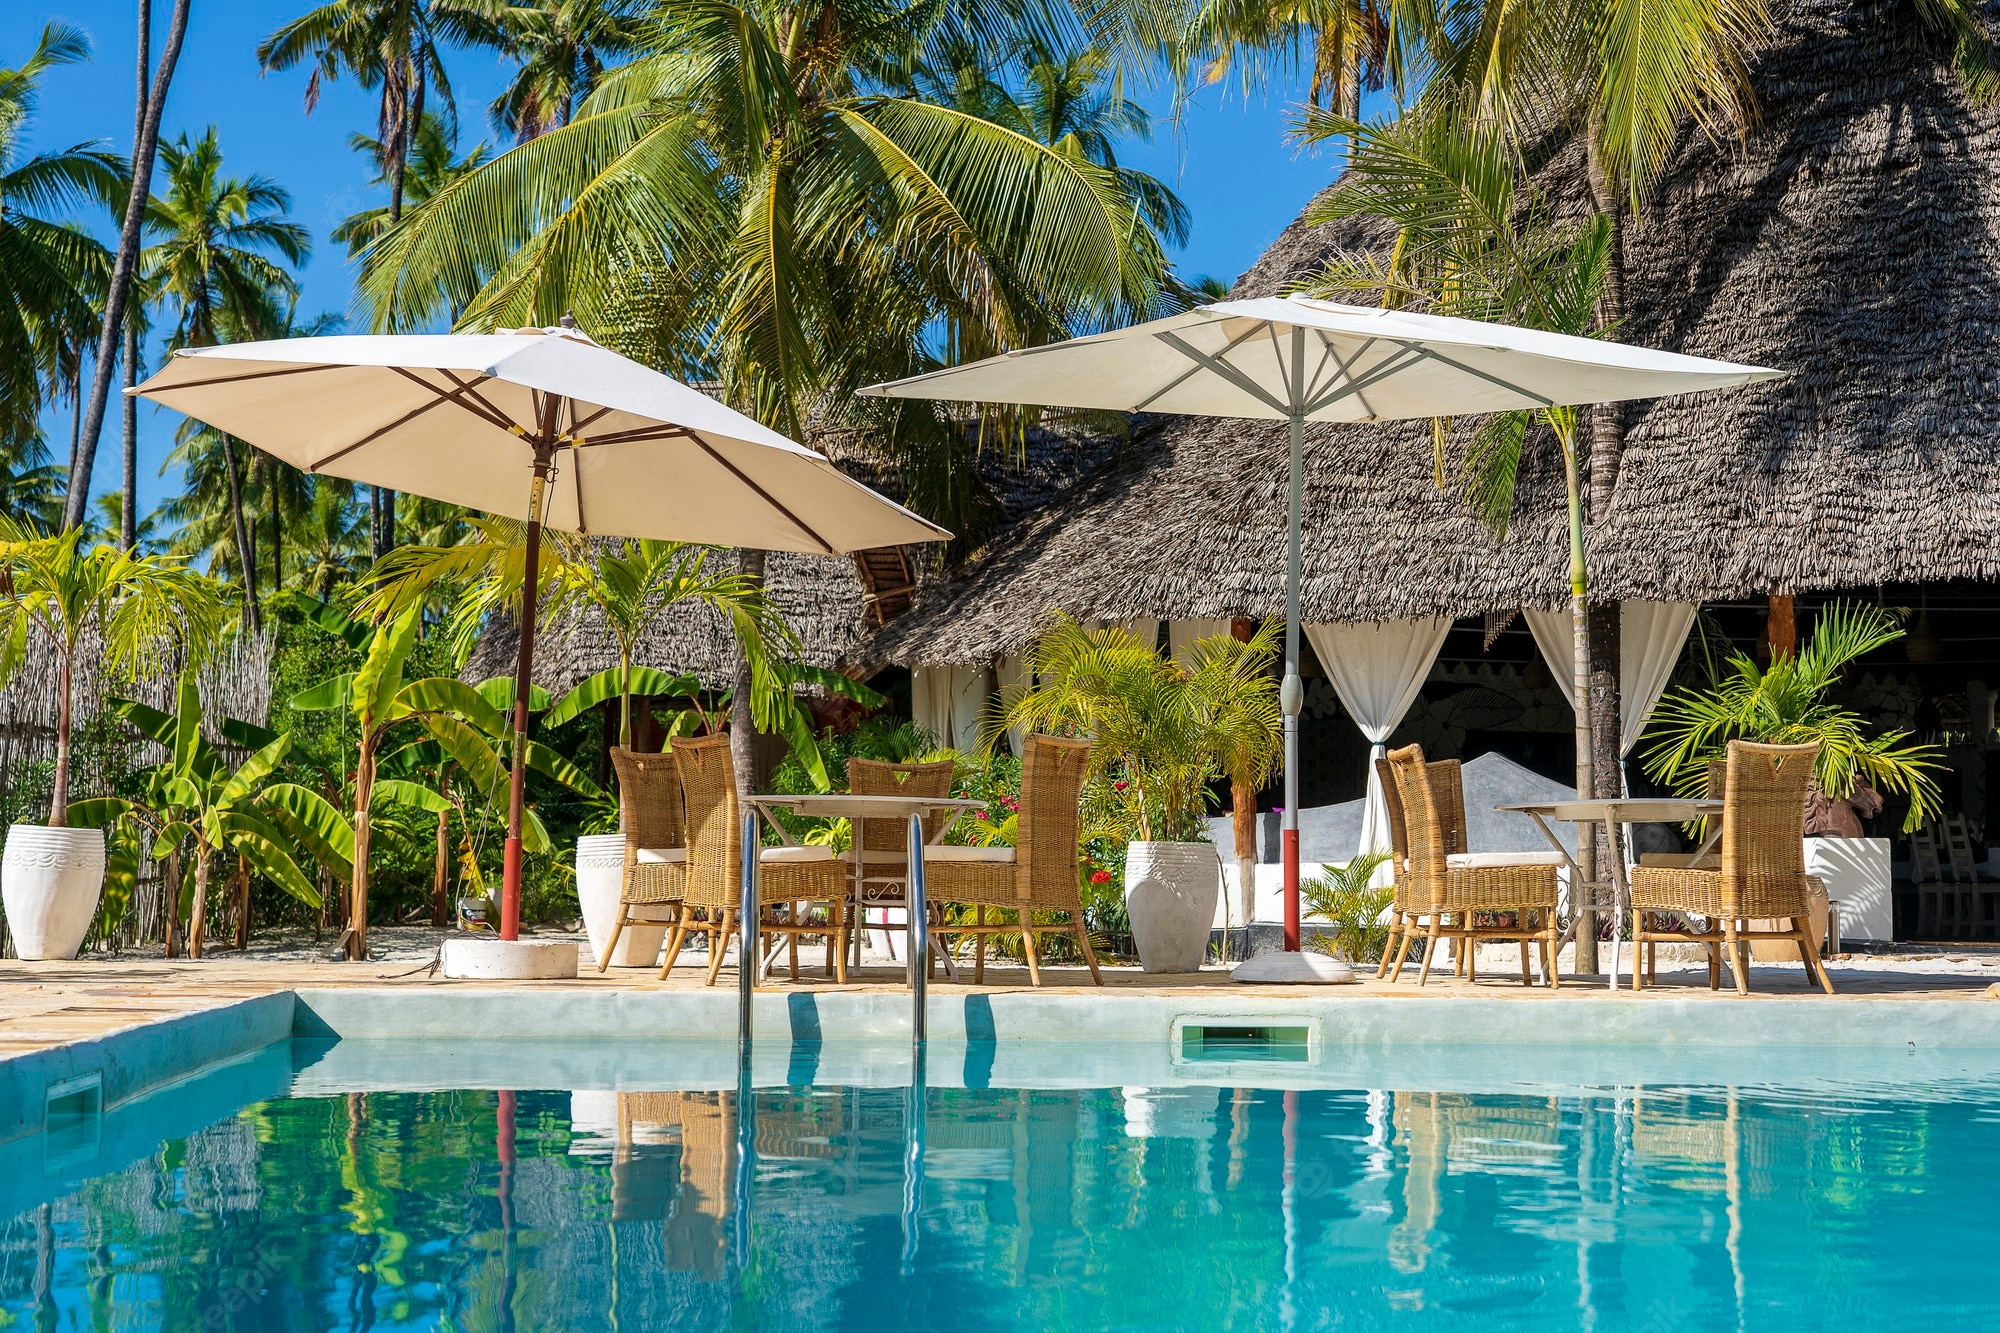 rest-zone-near-swimming-pool-tropical-beach-zanzibar-island-tanzania-africa-summer-travel-vacation-holiday-concept_185094-2388